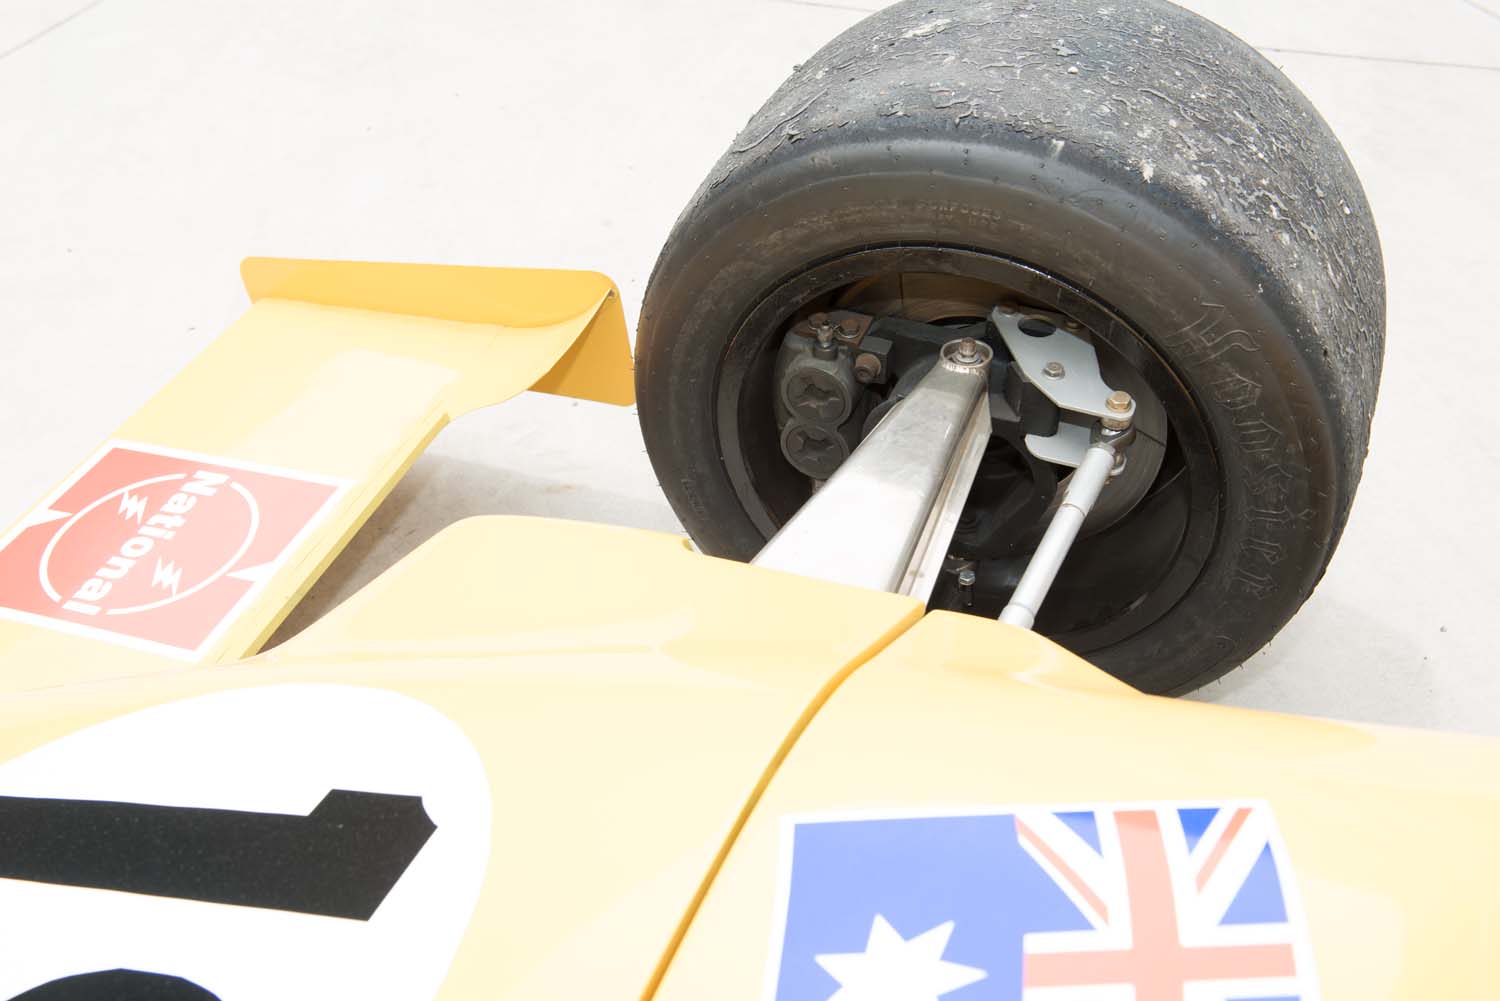 1981 RALT RT4 COSWORTH 1981 Australian Grand Prix winning racing car - Image 18 of 37